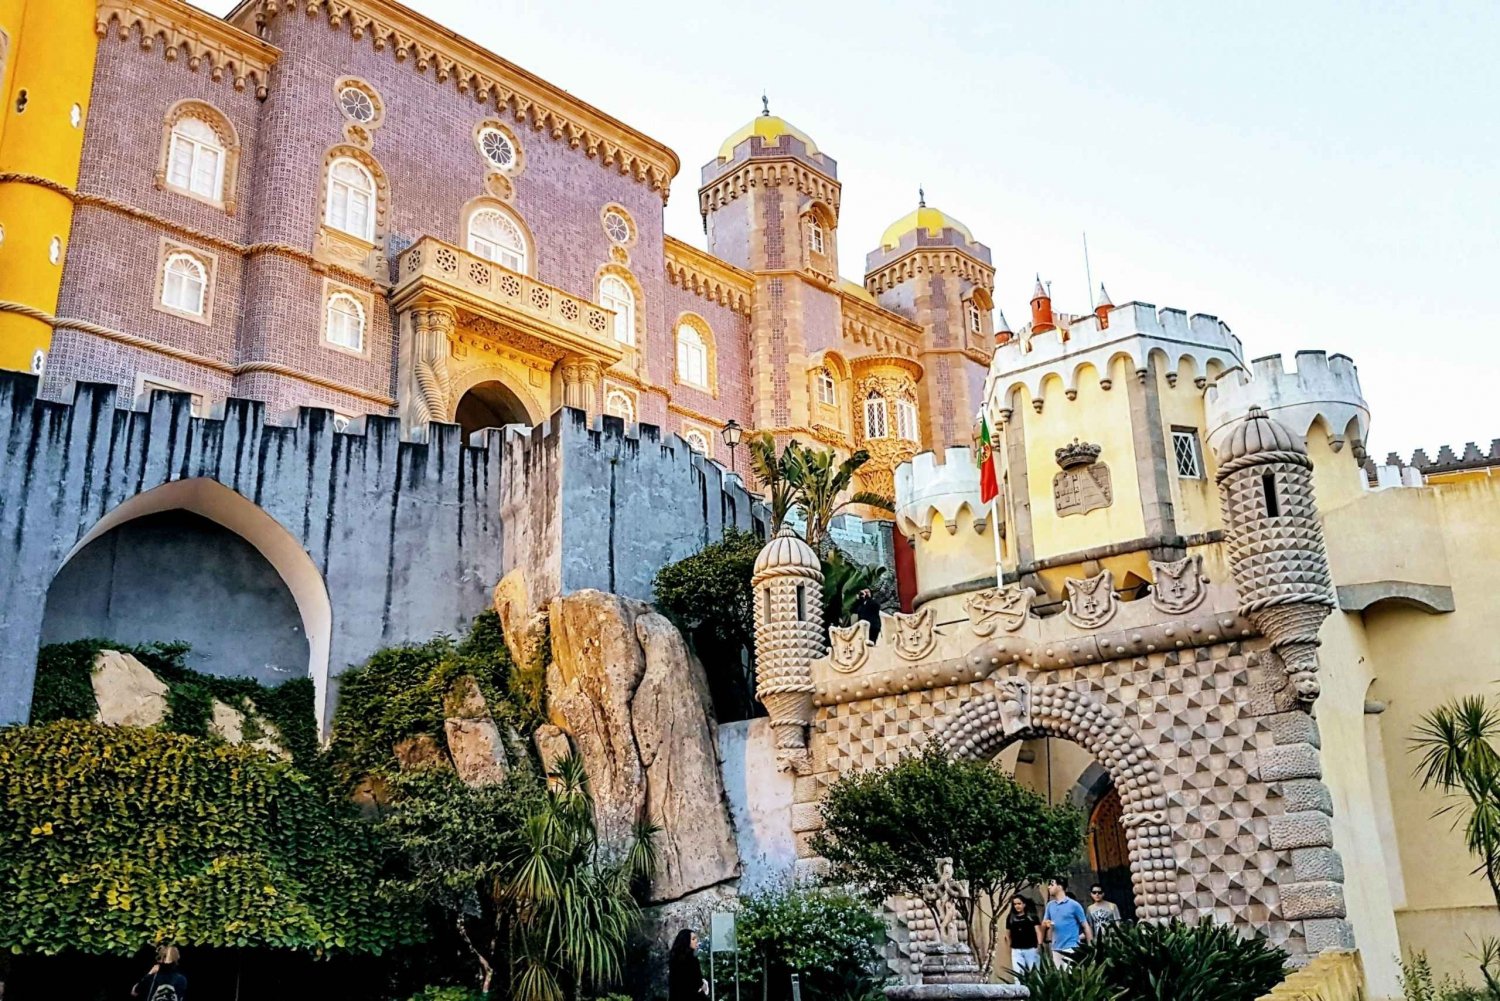 From Lisbon: Tour Sintra, Pena Palace, Regaleira and Cascais